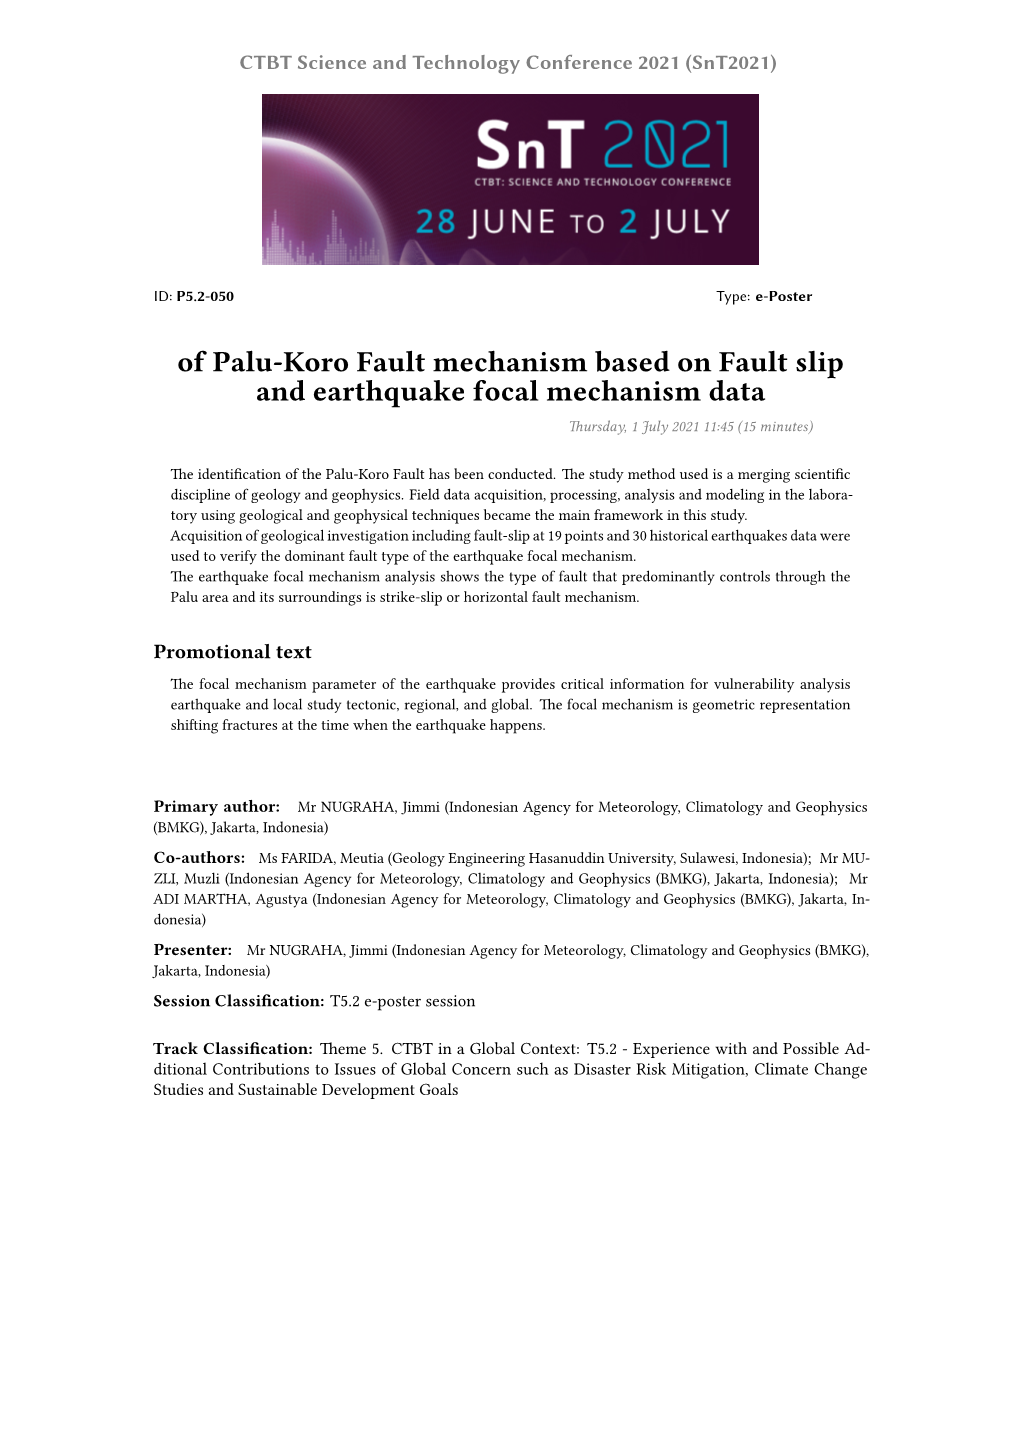 Of Palu-Koro Fault Mechanism Based on Fault Slip and Earthquake Focal Mechanism Data Thursday, 1 July 2021 11:45 (15 Minutes)